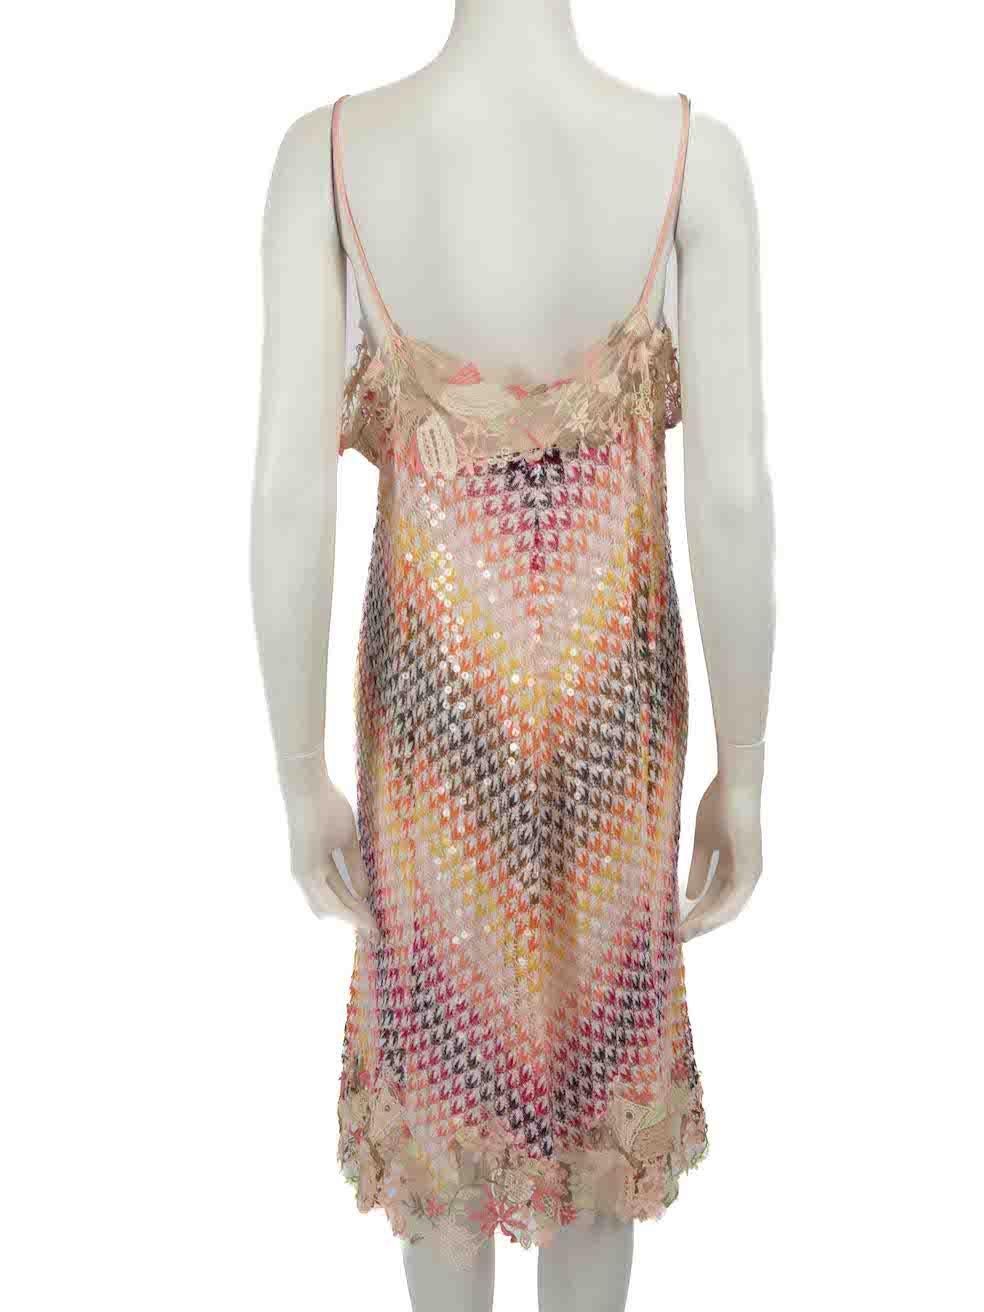 Missoni Zigzag Knit Sequin Lace Trim Mini Dress Size M In Good Condition For Sale In London, GB